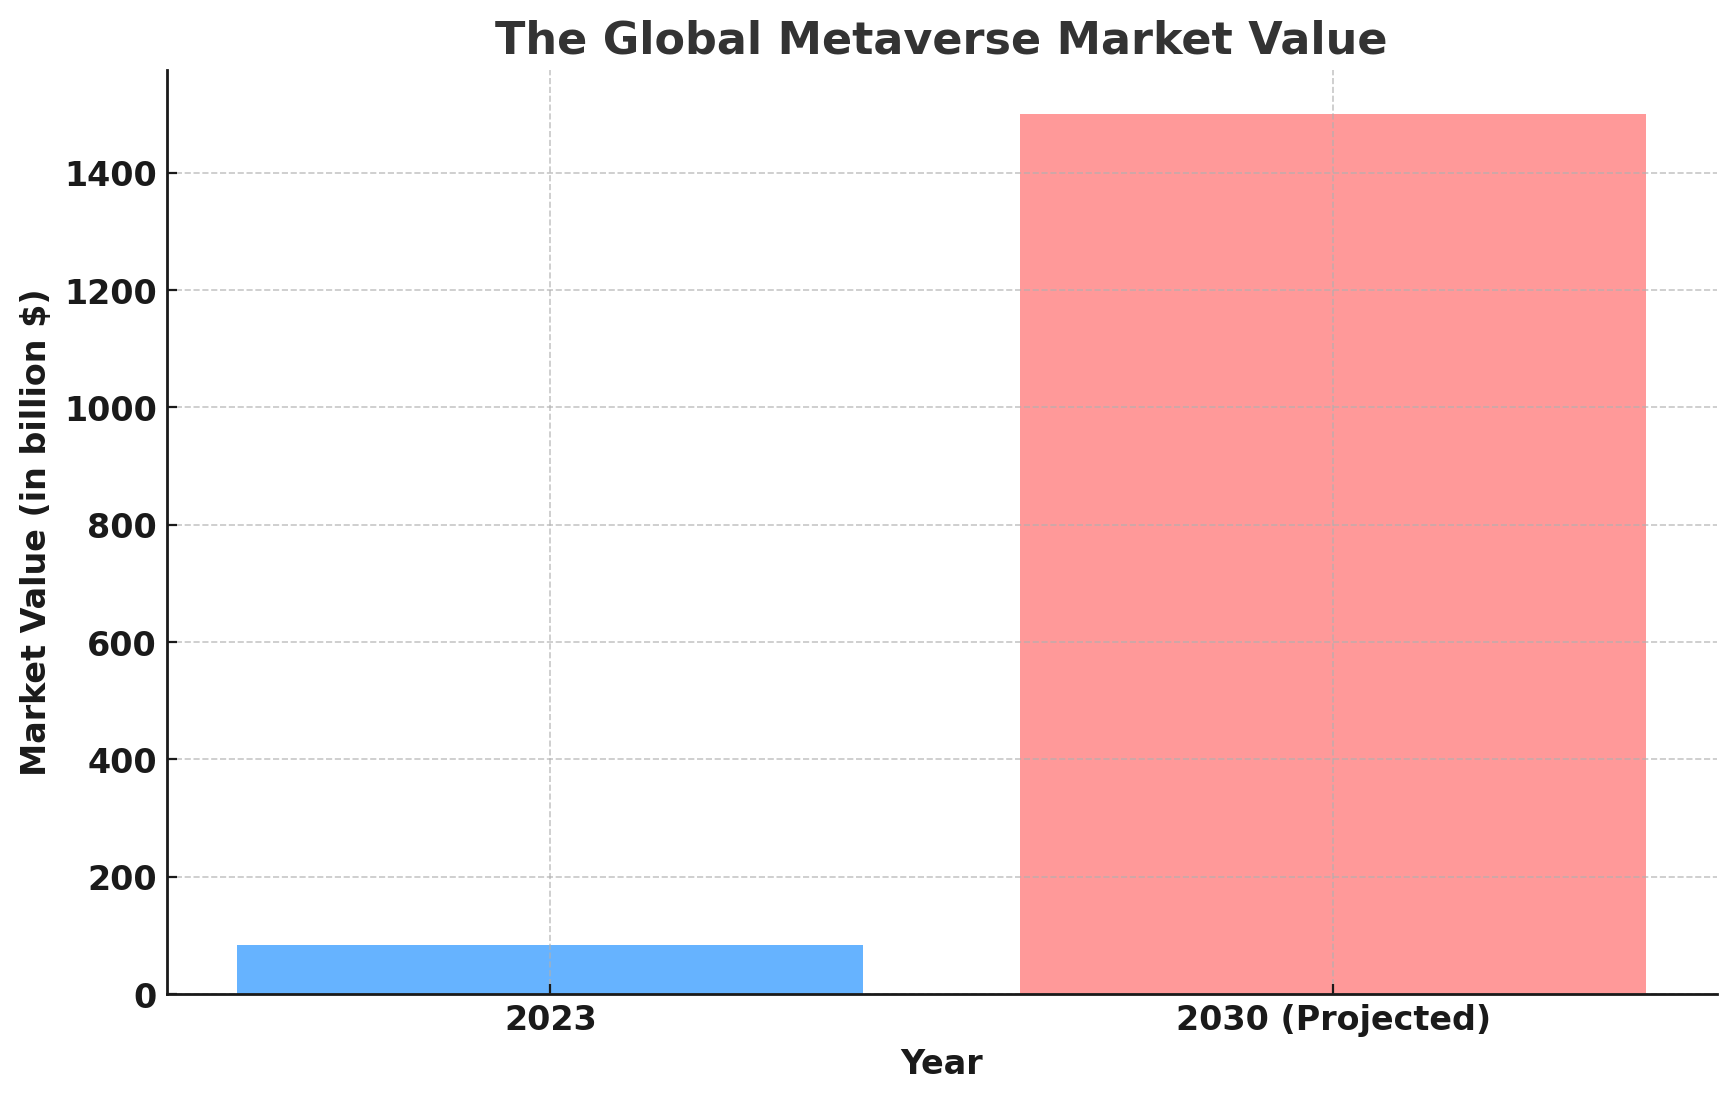 The global metaverse market value